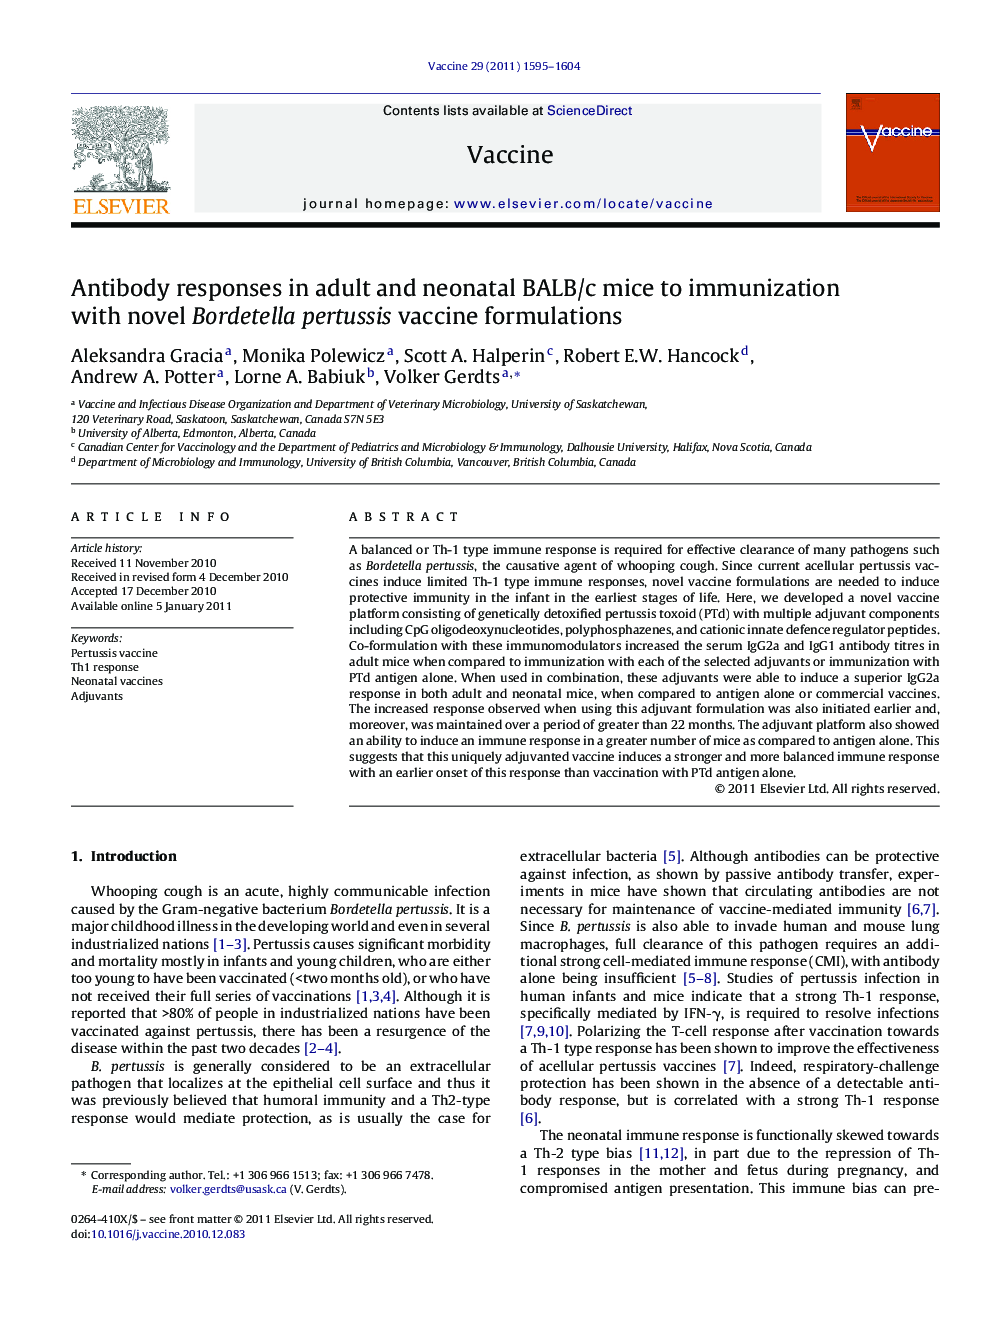 Antibody responses in adult and neonatal BALB/c mice to immunization with novel Bordetella pertussis vaccine formulations